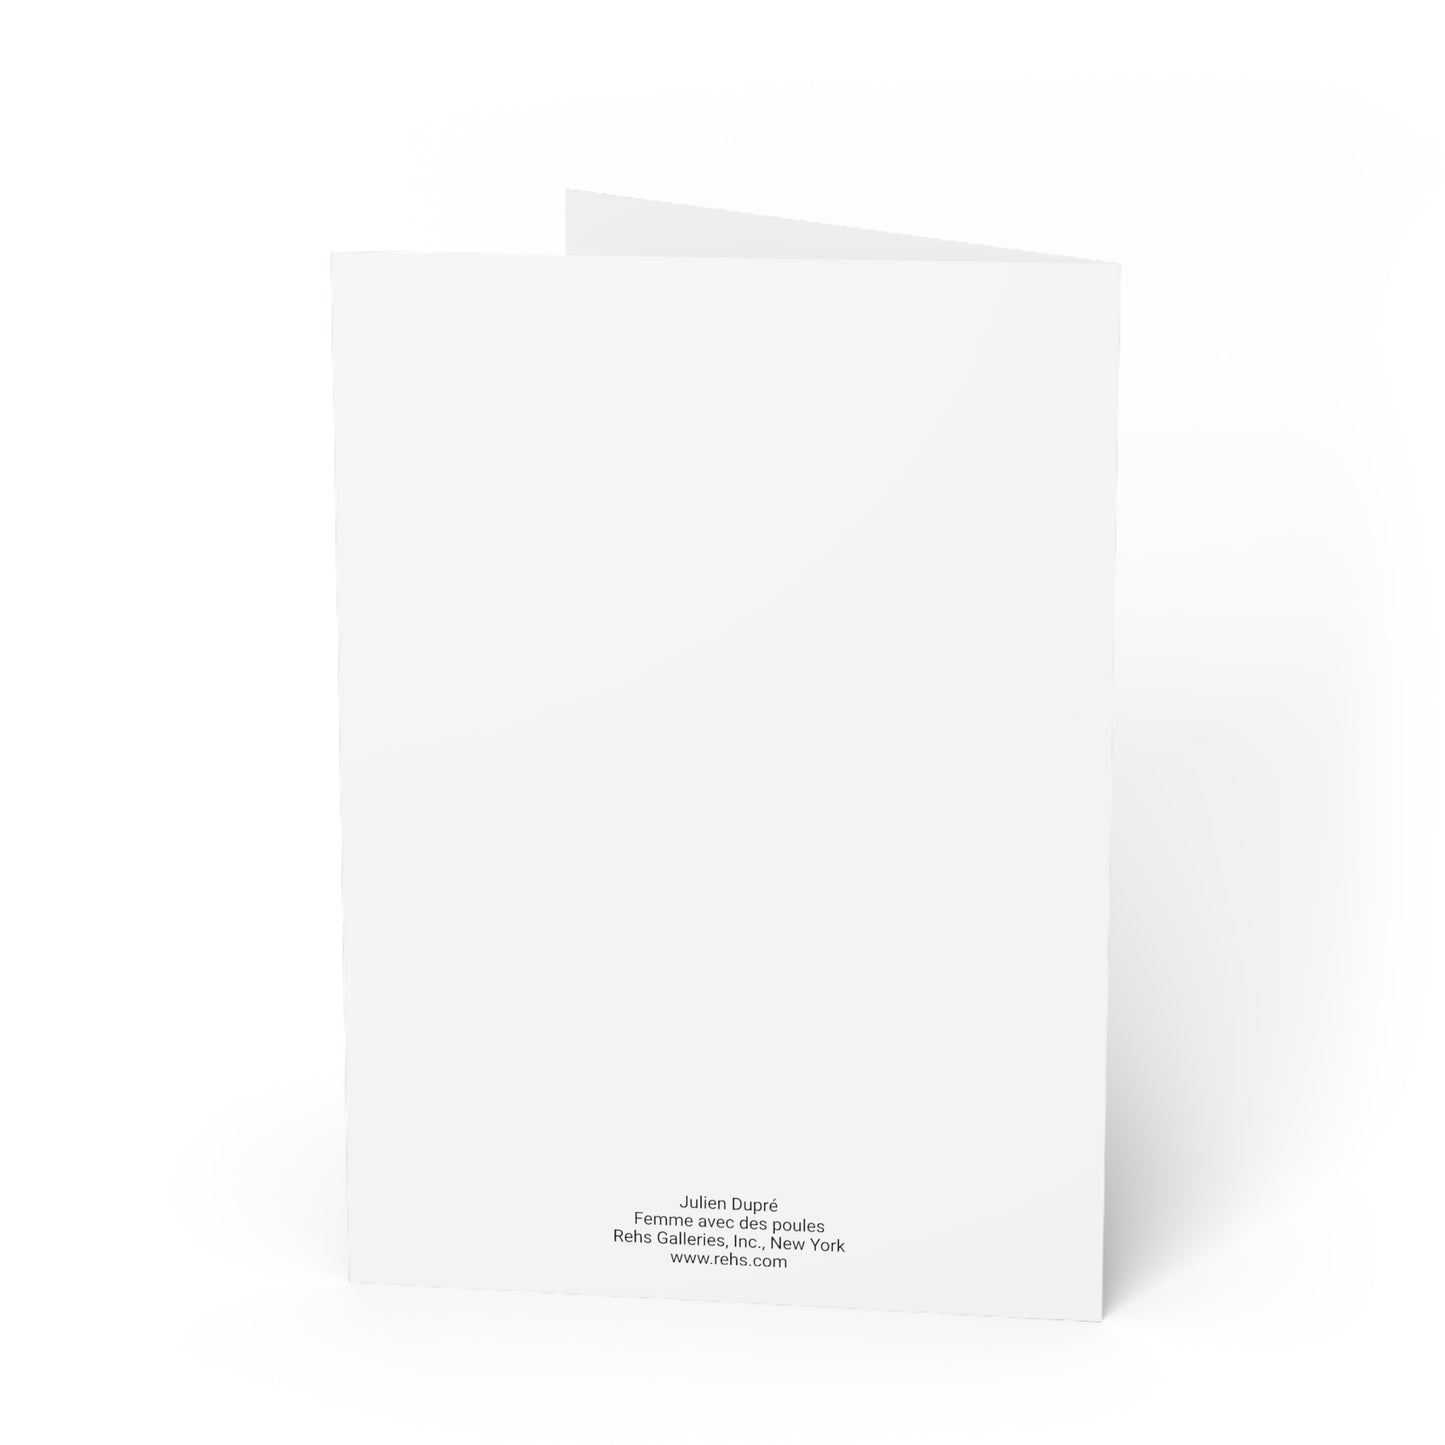 Julien Dupre: "Femme avec des poules" - Folded Greeting Cards